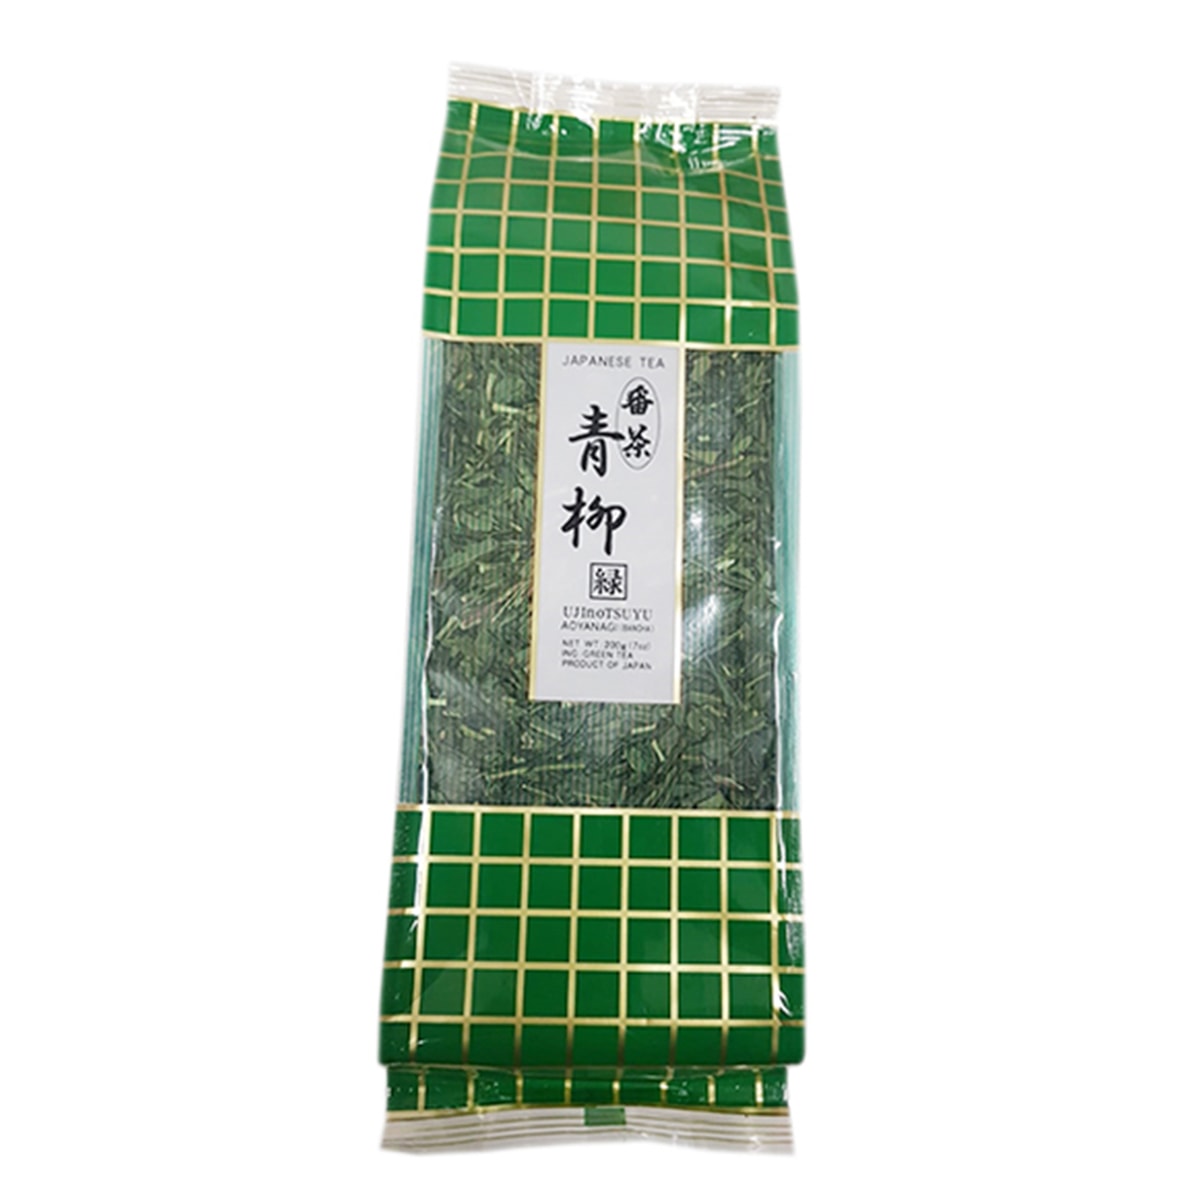 Buy Ujinotsuyu Japanese Green Tea Loose (Aoyanagi Green) - 200 gm